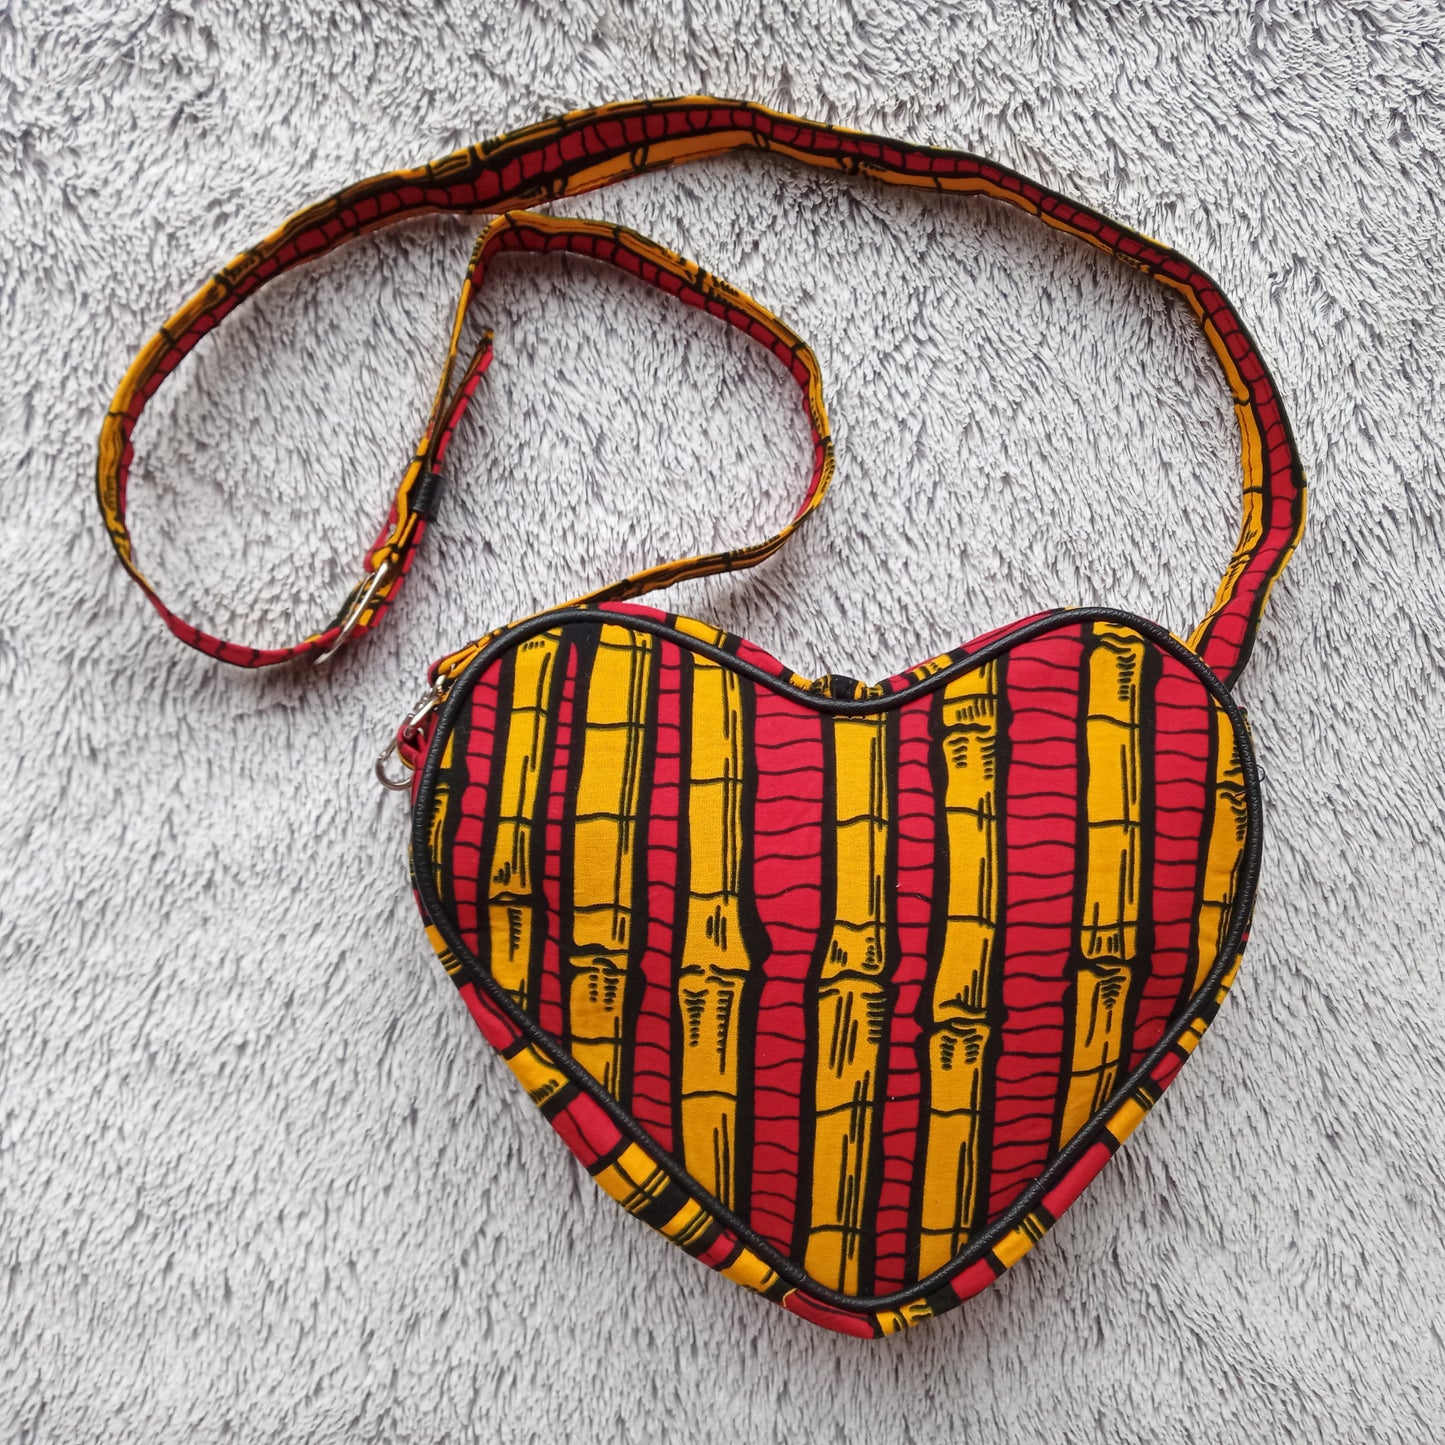 Heart Crossbody Bag